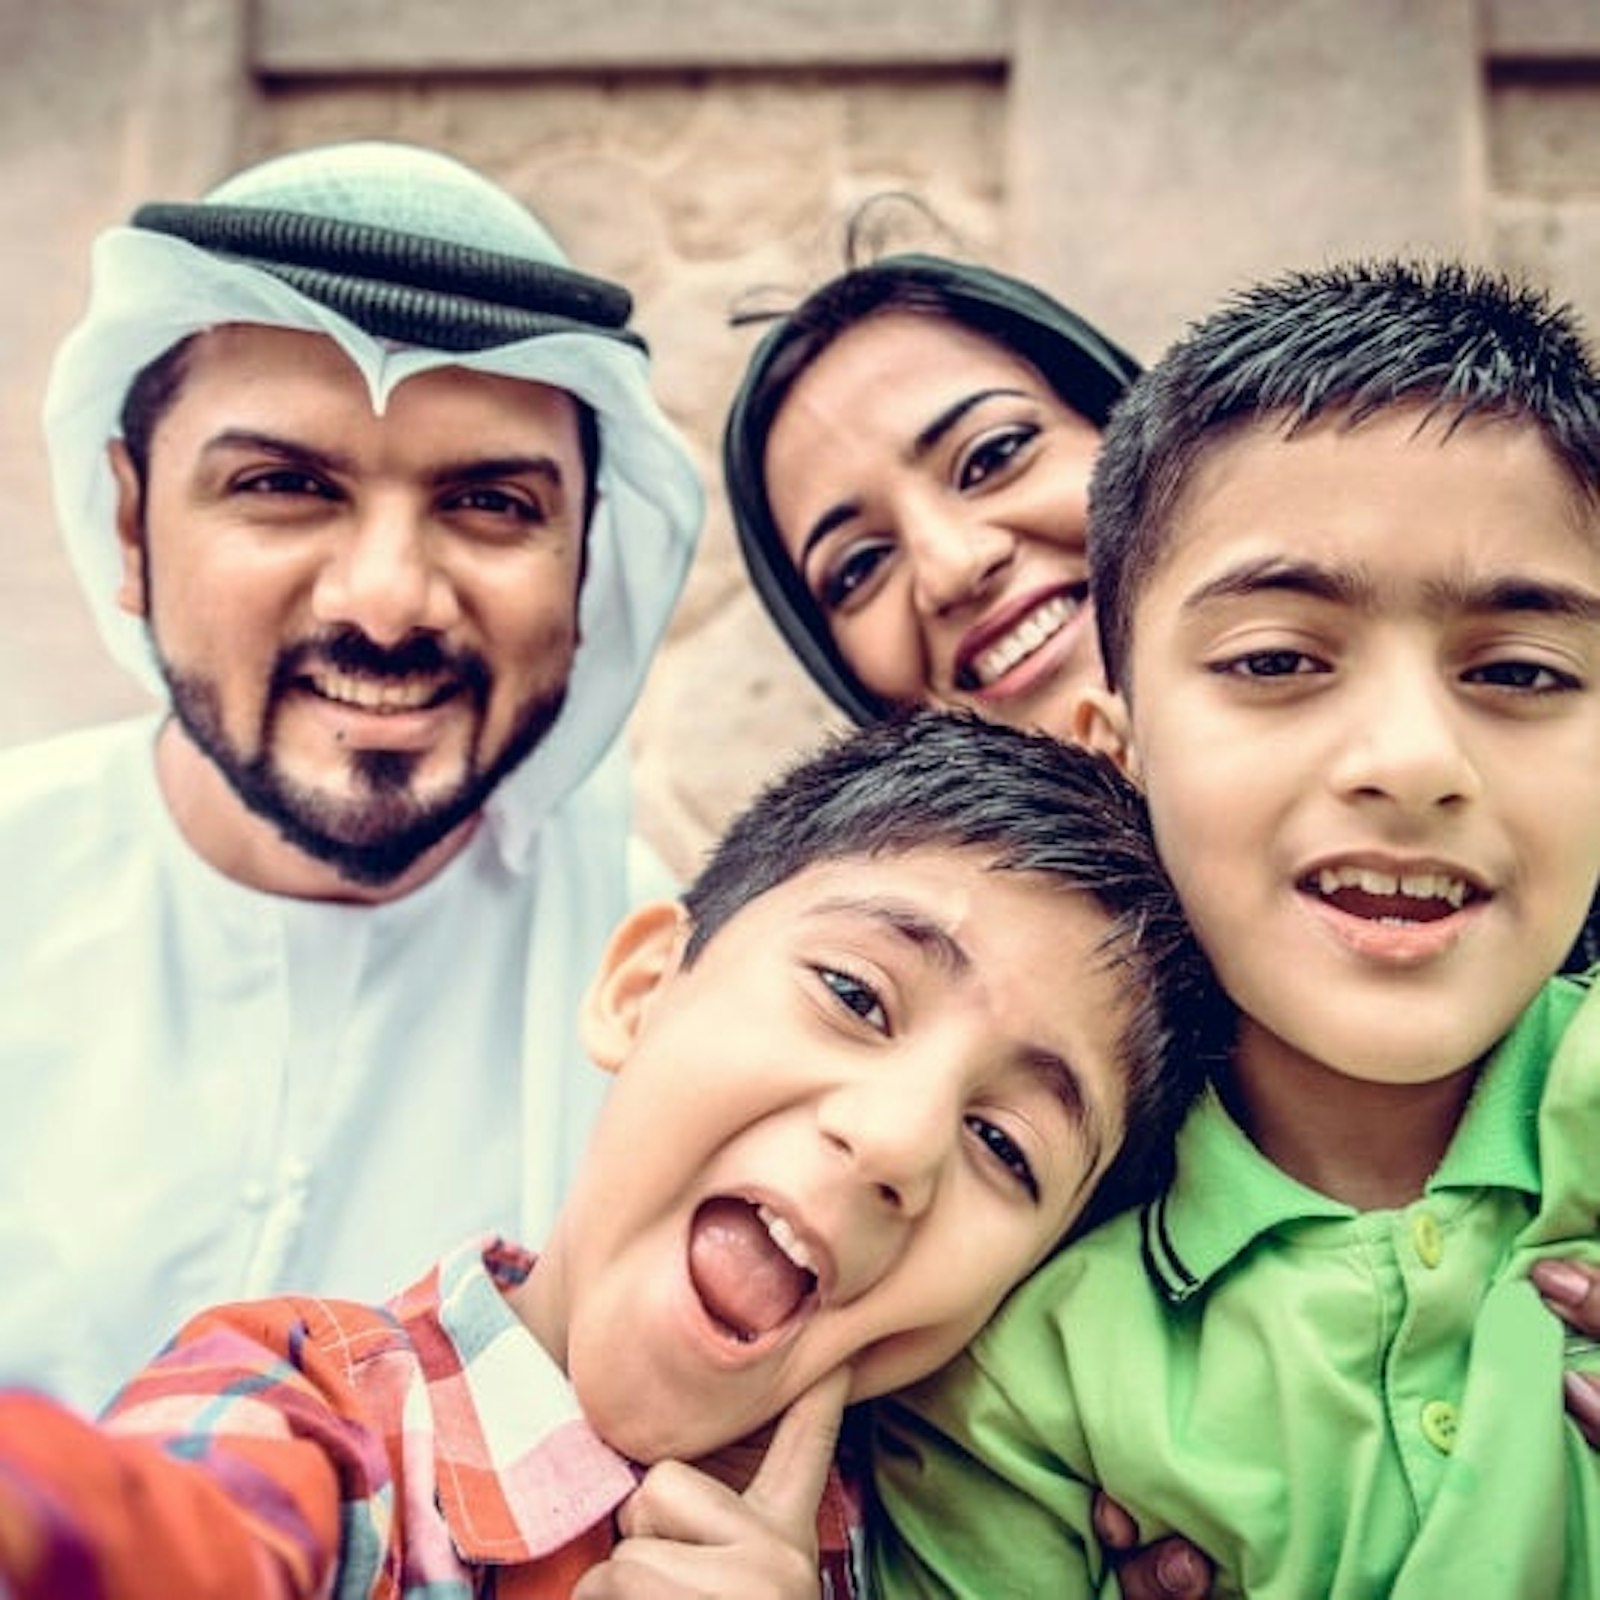 Arabic family selfie